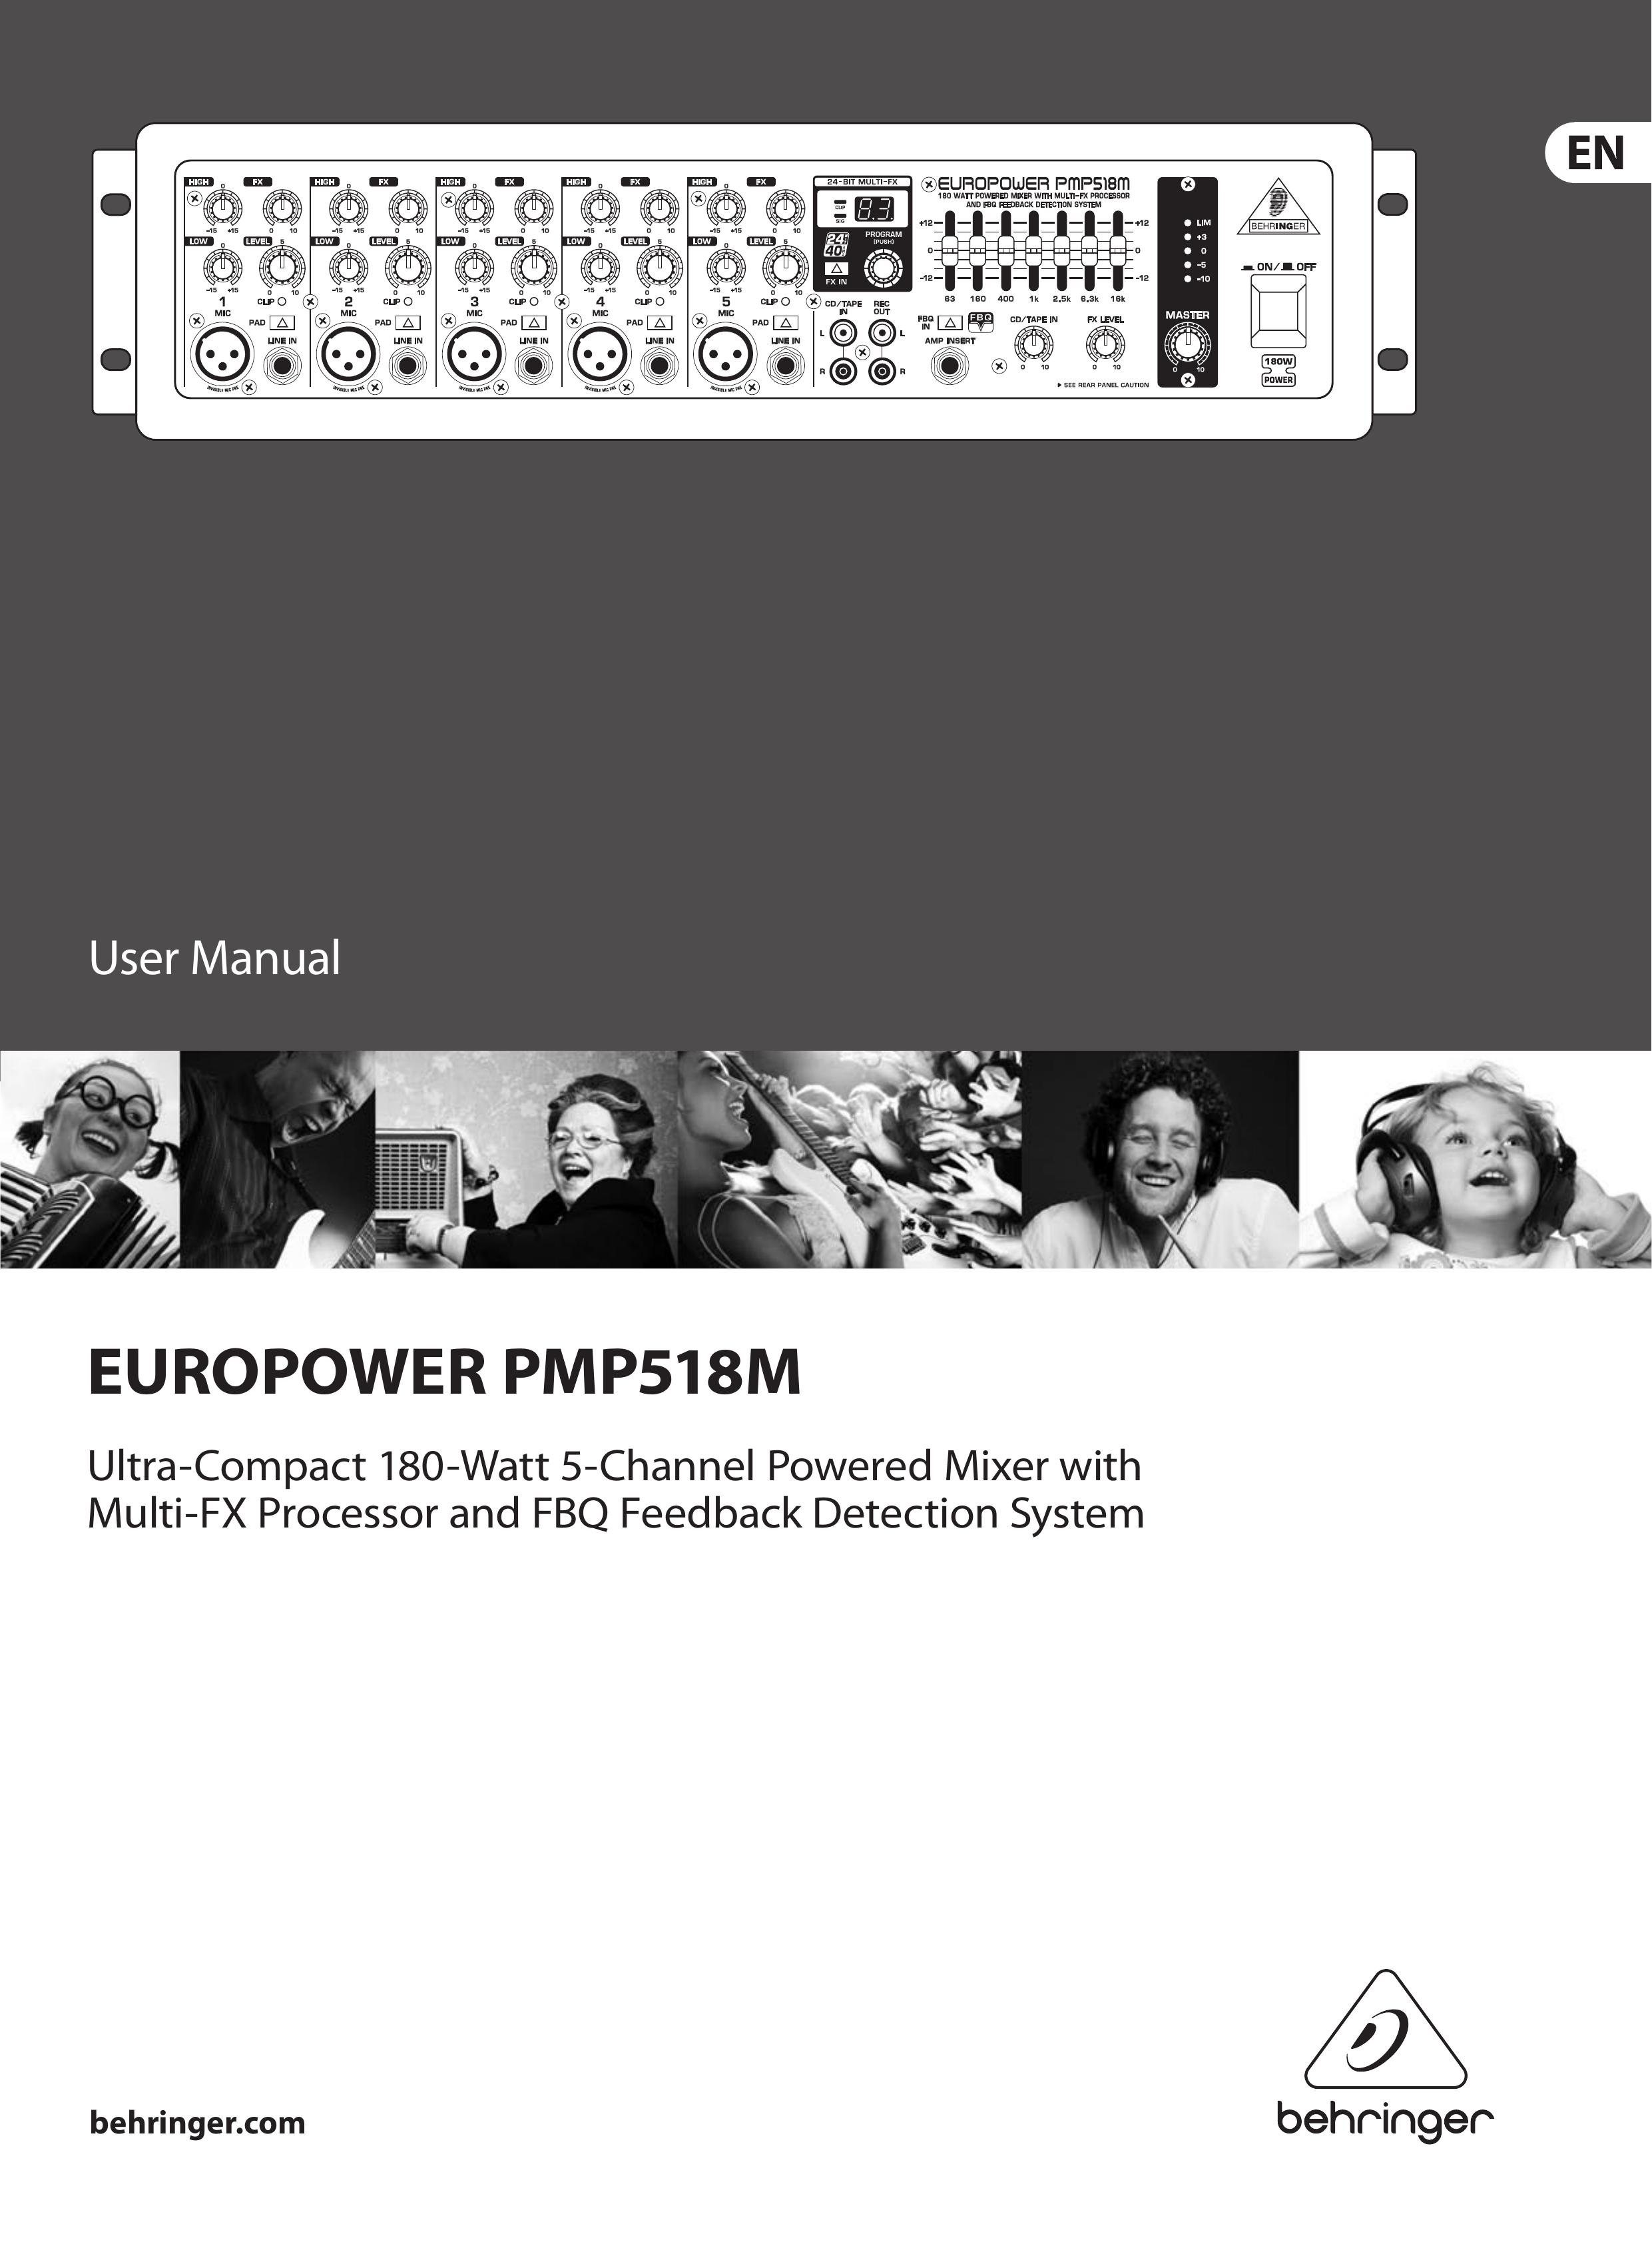 Behringer PMP518M Music Mixer User Manual